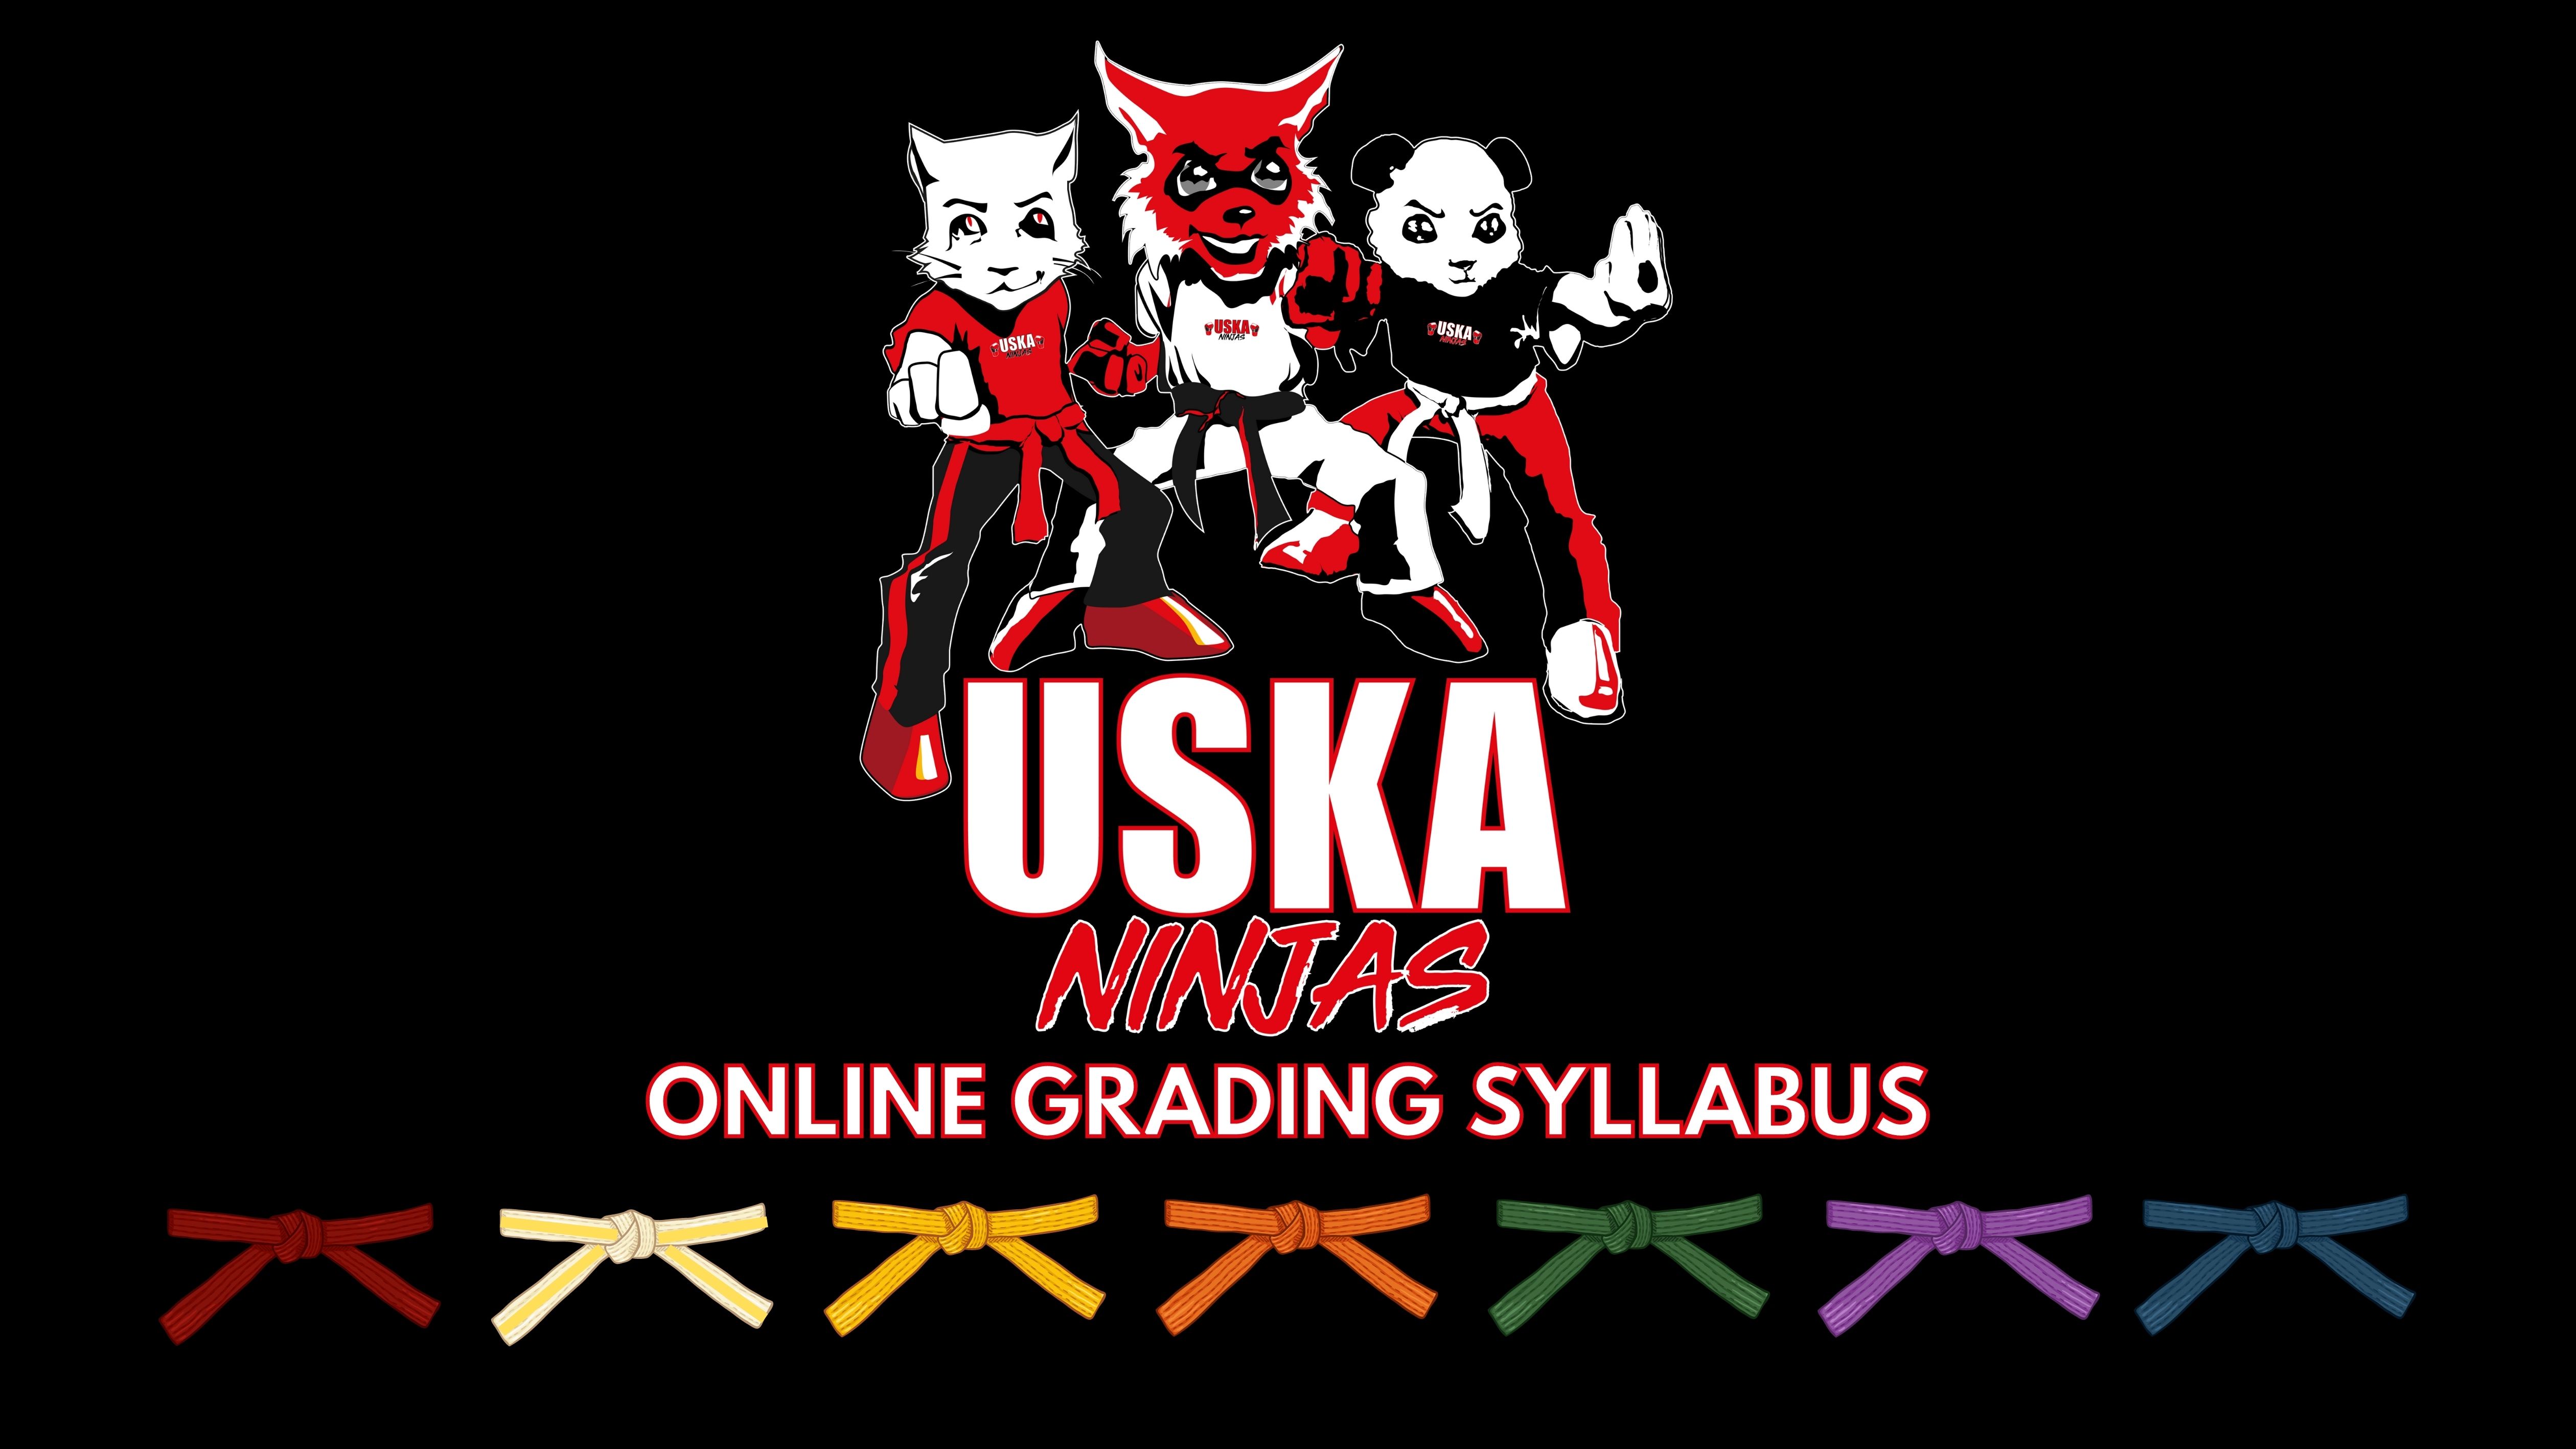 18-04-23 - USKA Ninjas Syllabus video's now complete on our members App